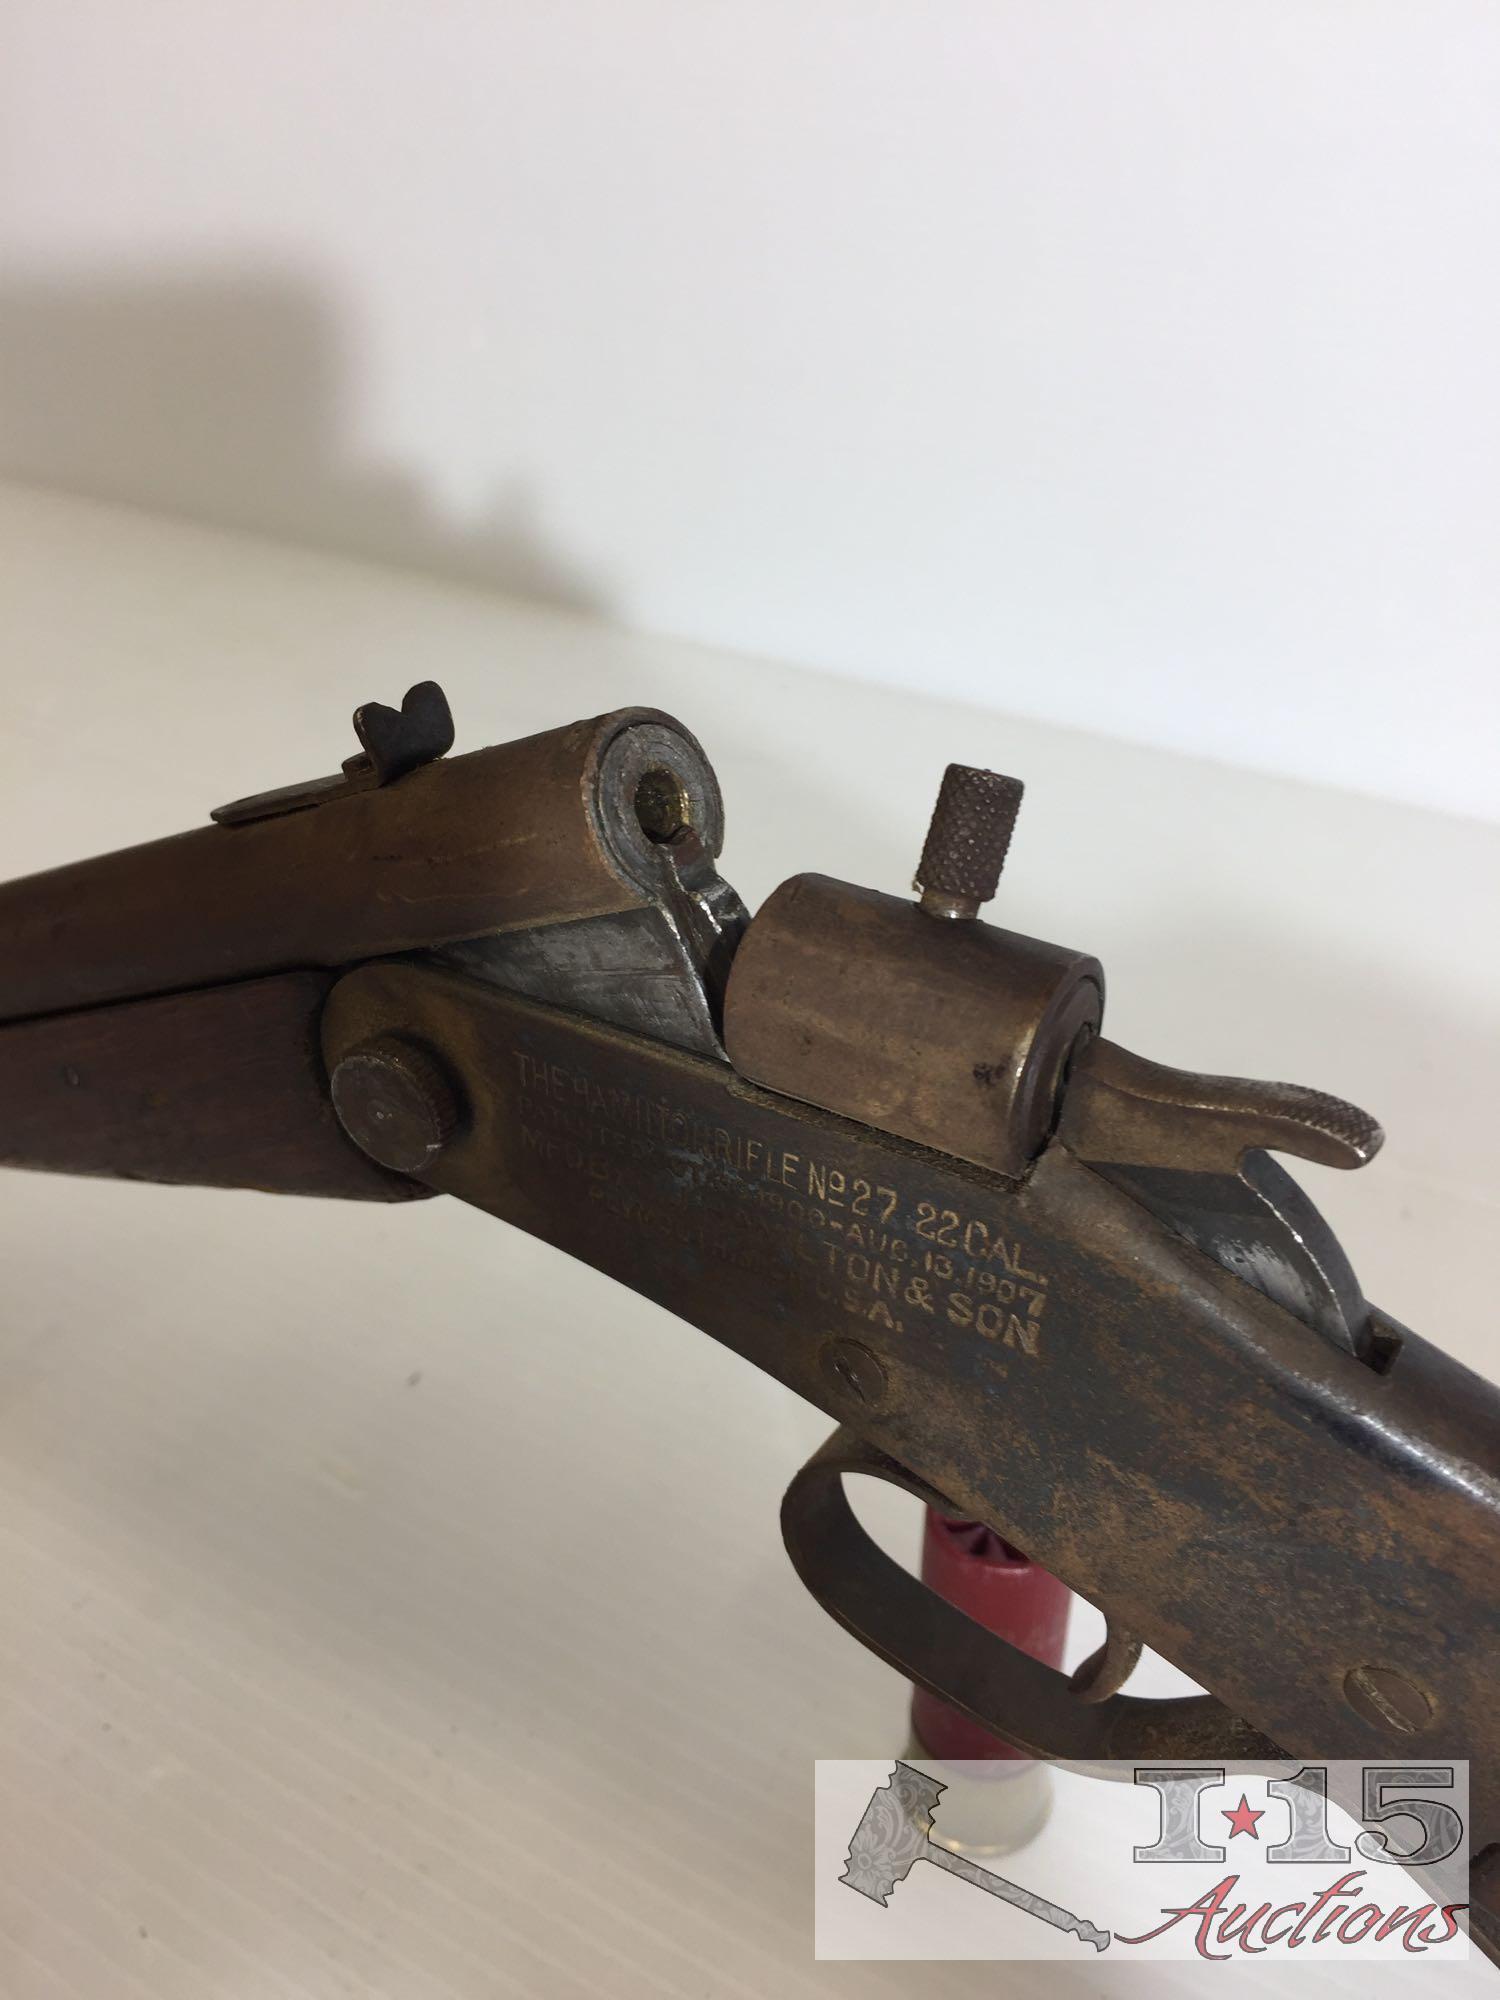 The Hamilton Rifle No. 27 .22cal